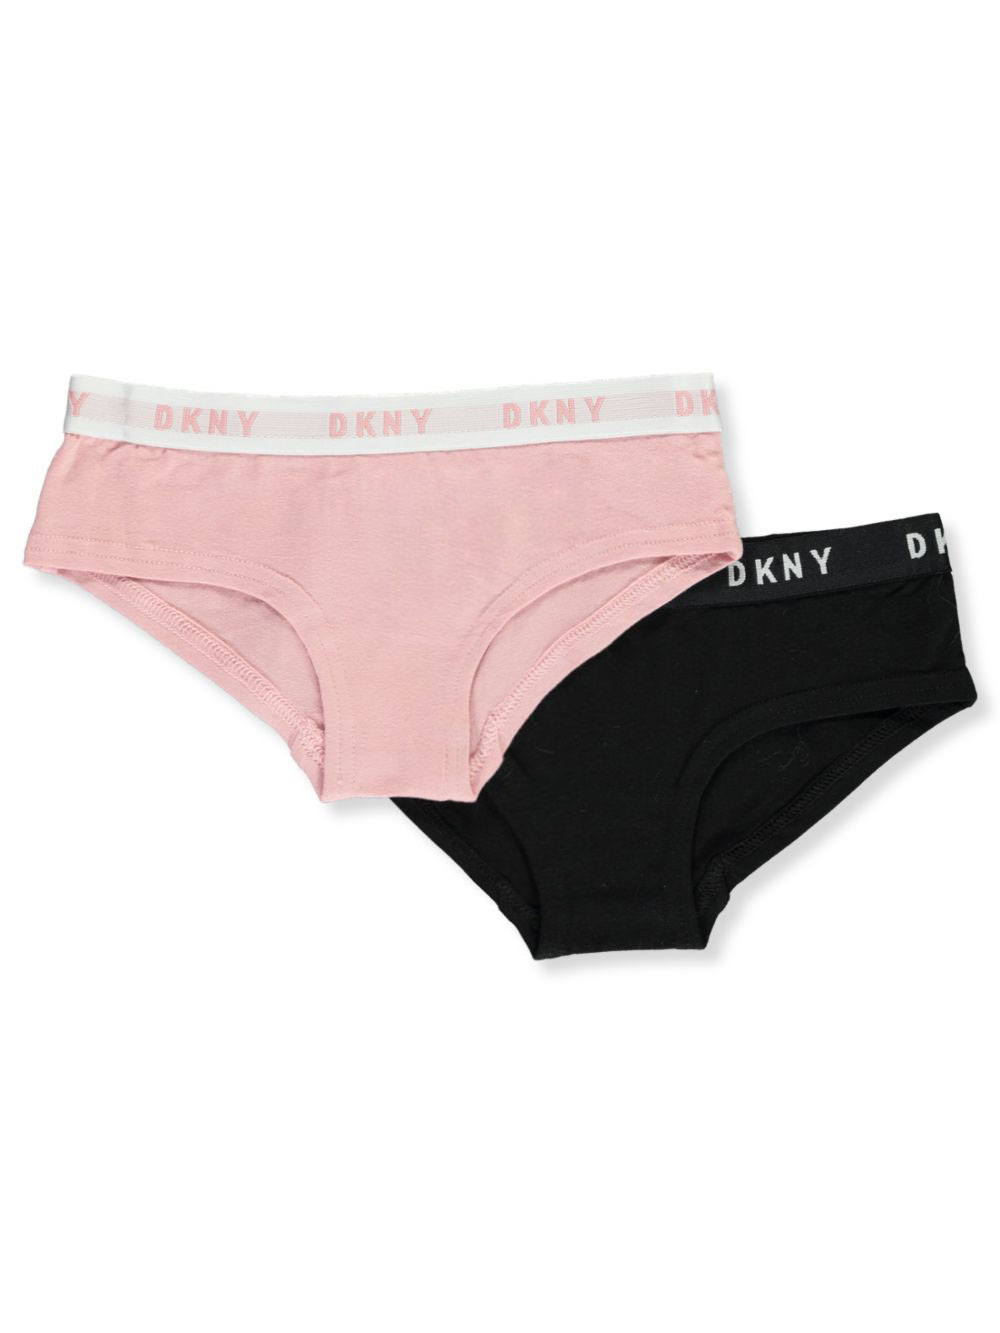 DKNY Girls' 2-Pack Hipster Panties | eBay